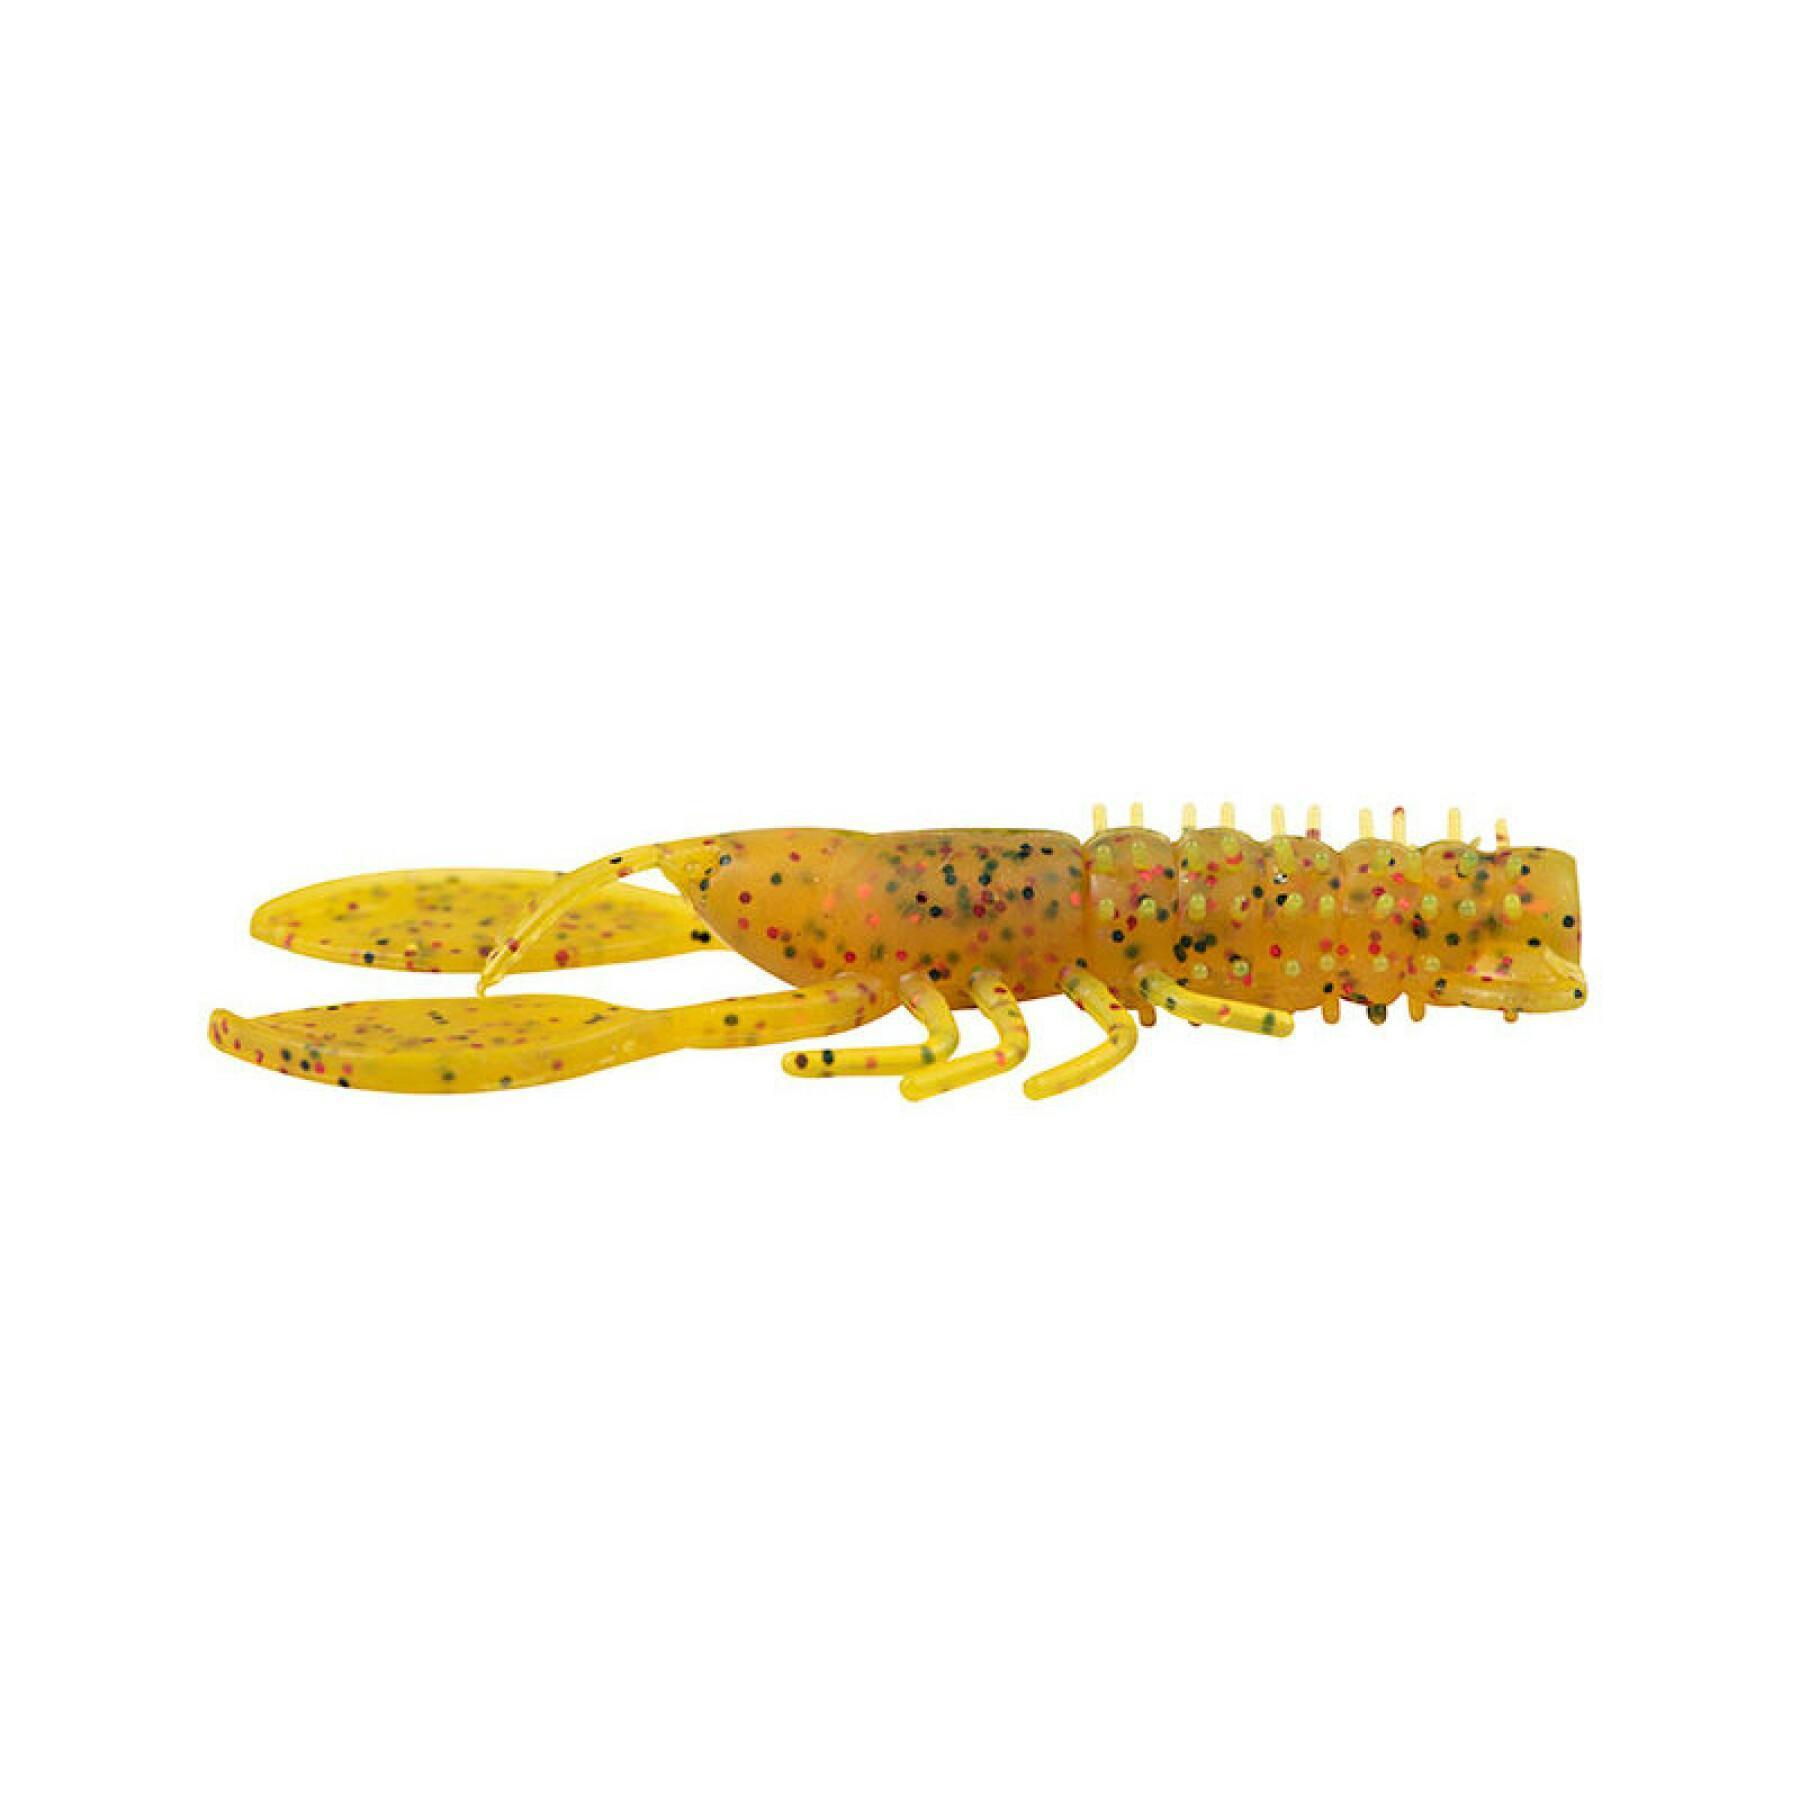 Creature Fox Rage crayfish sparkling oil UV